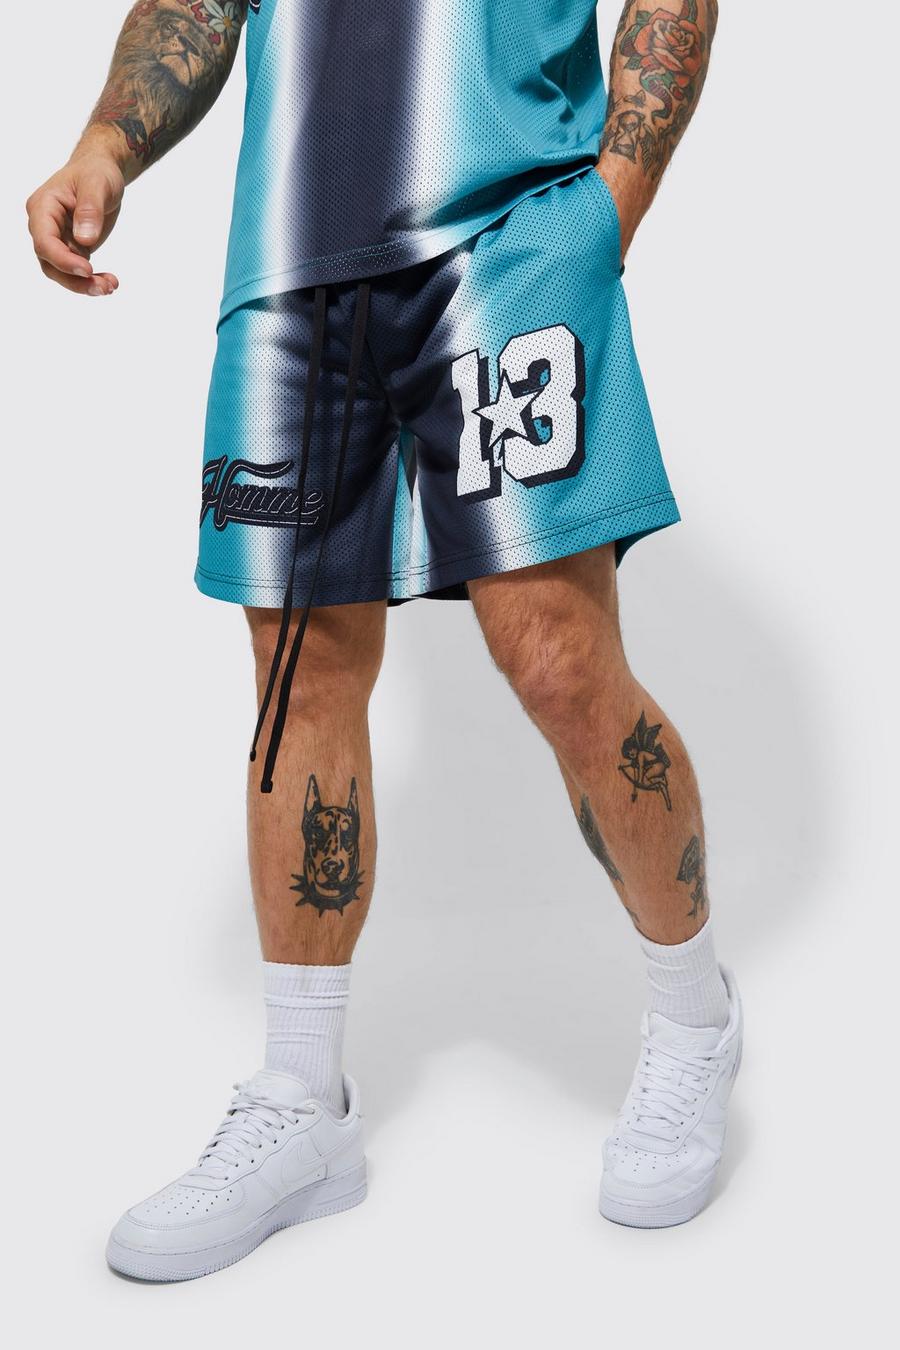 Pantalón corto de baloncesto de malla con estampado Homme en degradado, Teal